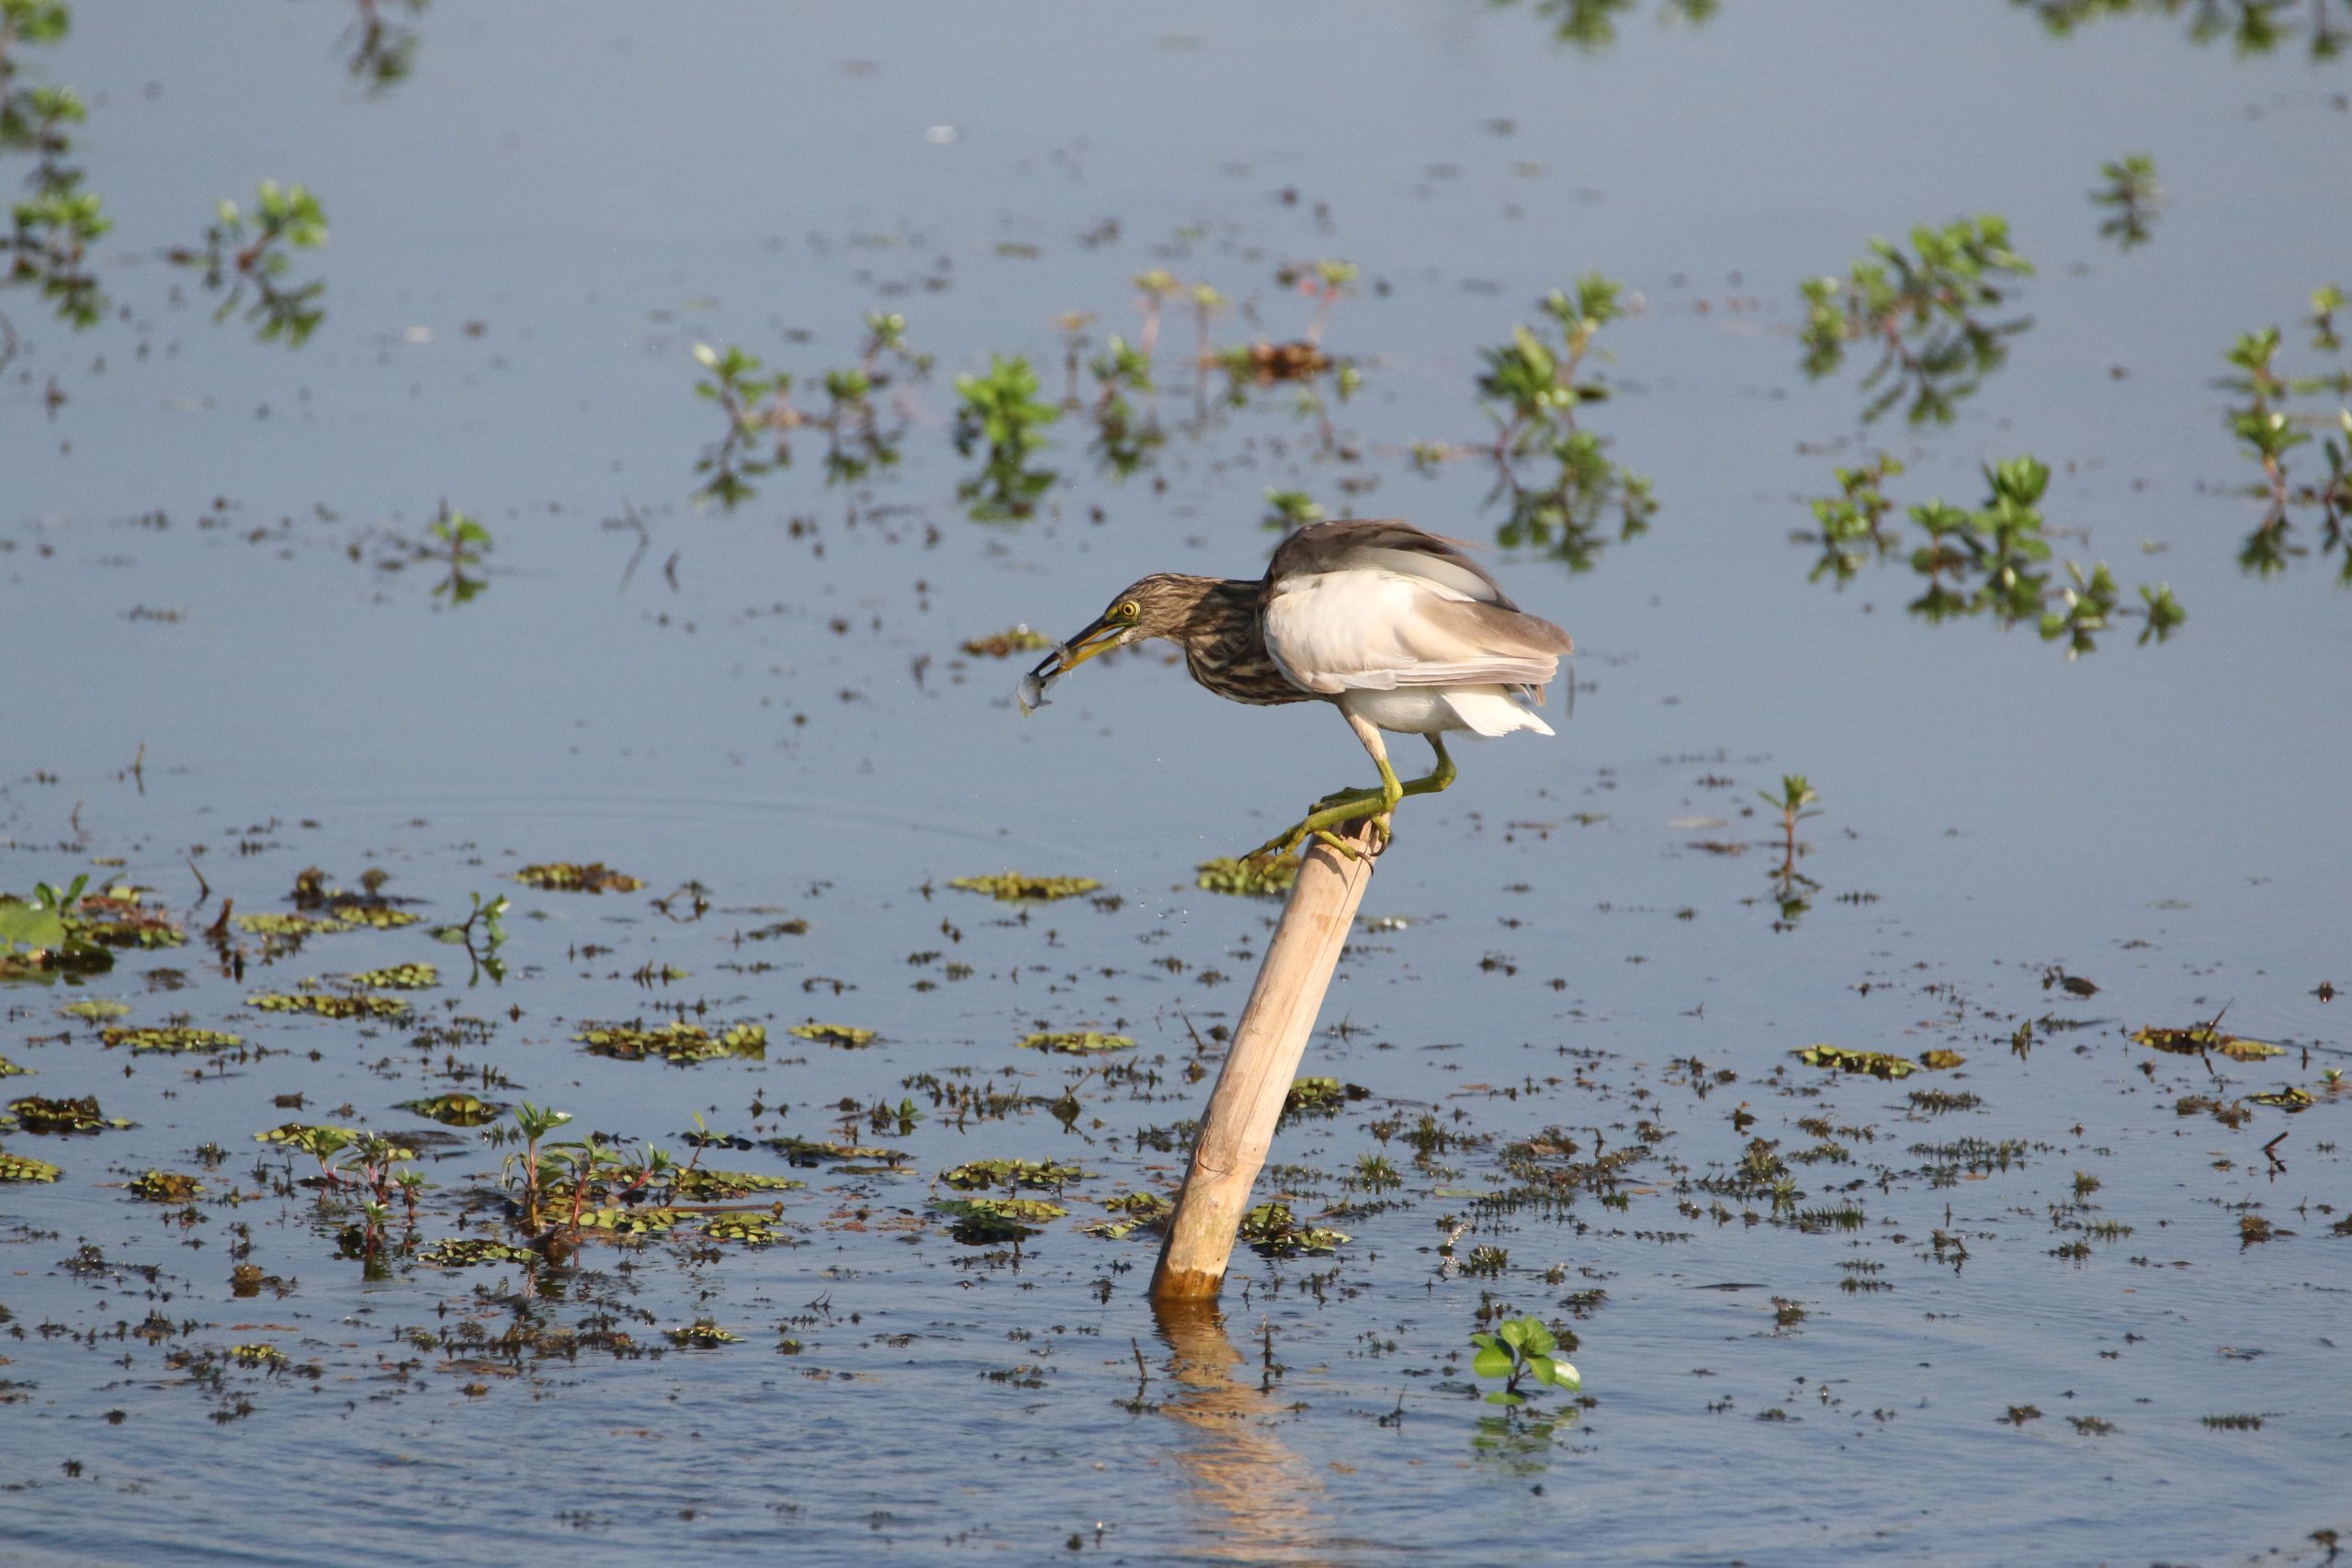 Water Bird on a Stick